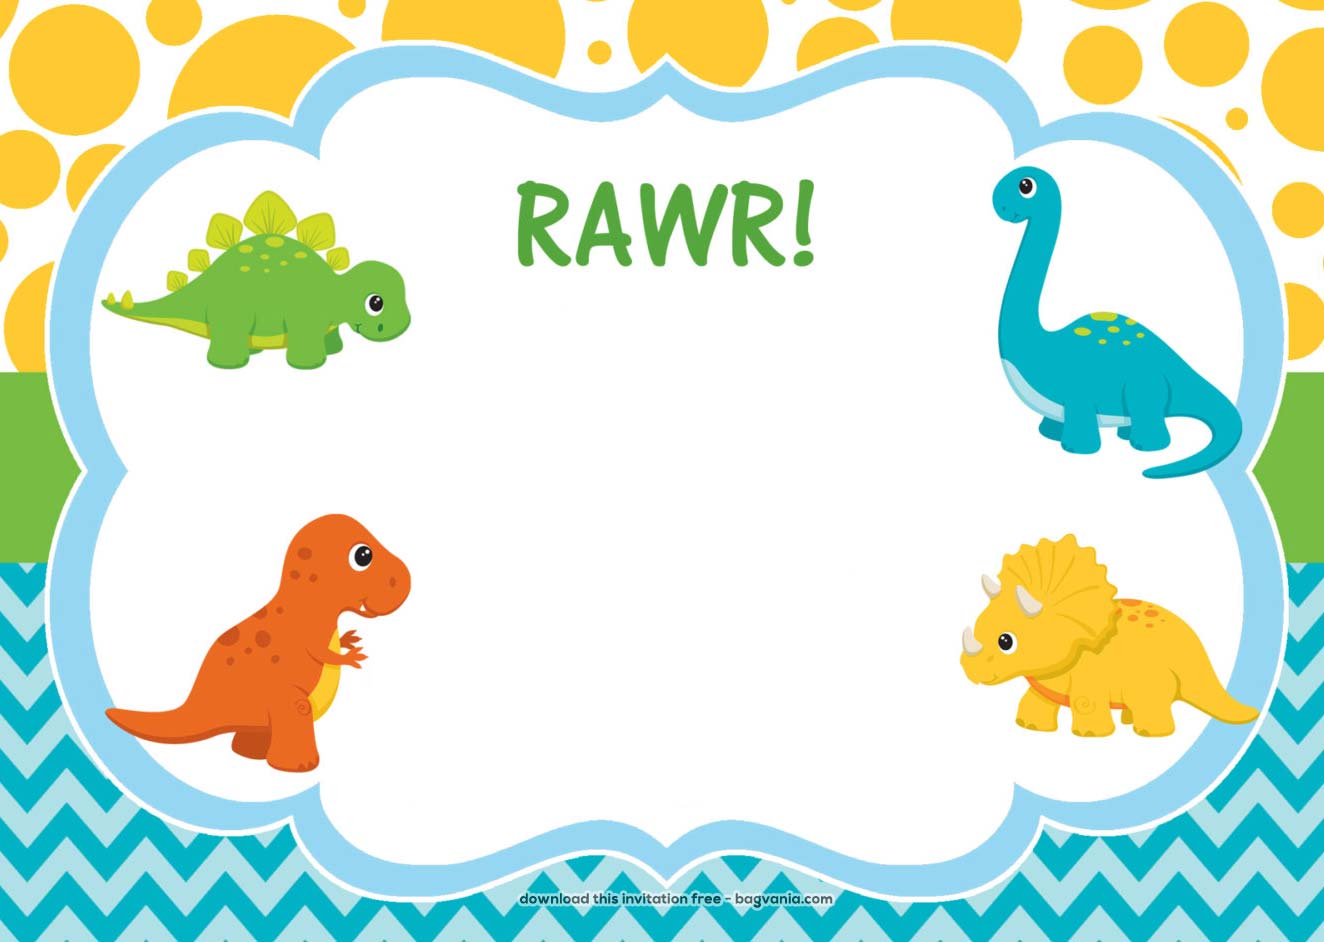 dinosaur-themed-birthday-party-printables-free-printable-templates